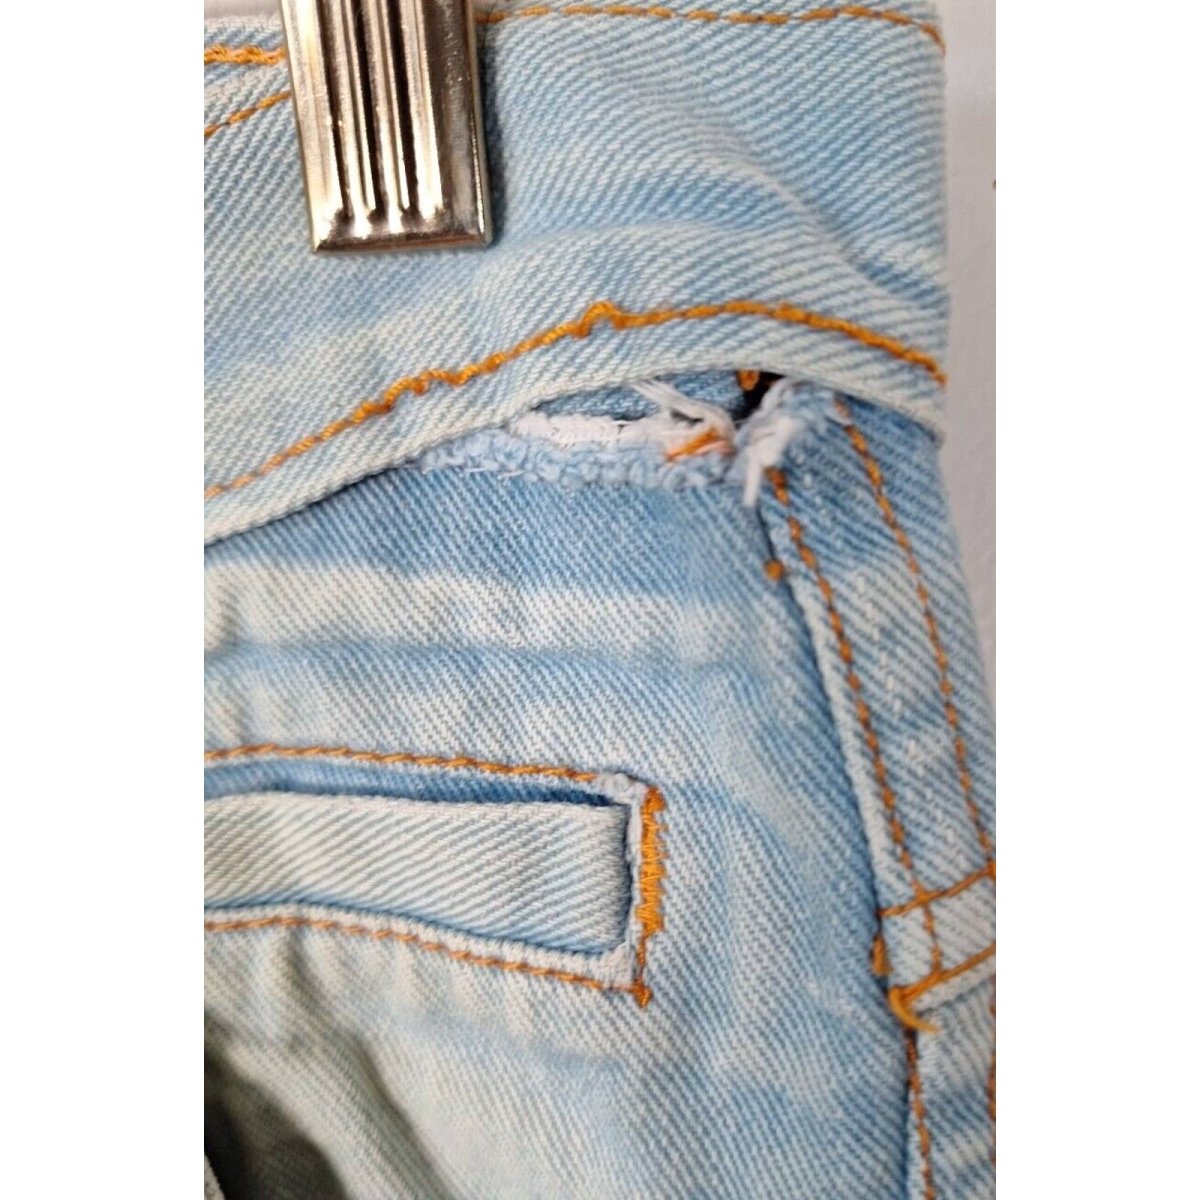 Vintage 70s Destroyed Light Wash Denim Bell Bottom Jeans 29x31 Slim - themallvintage The Mall Vintage